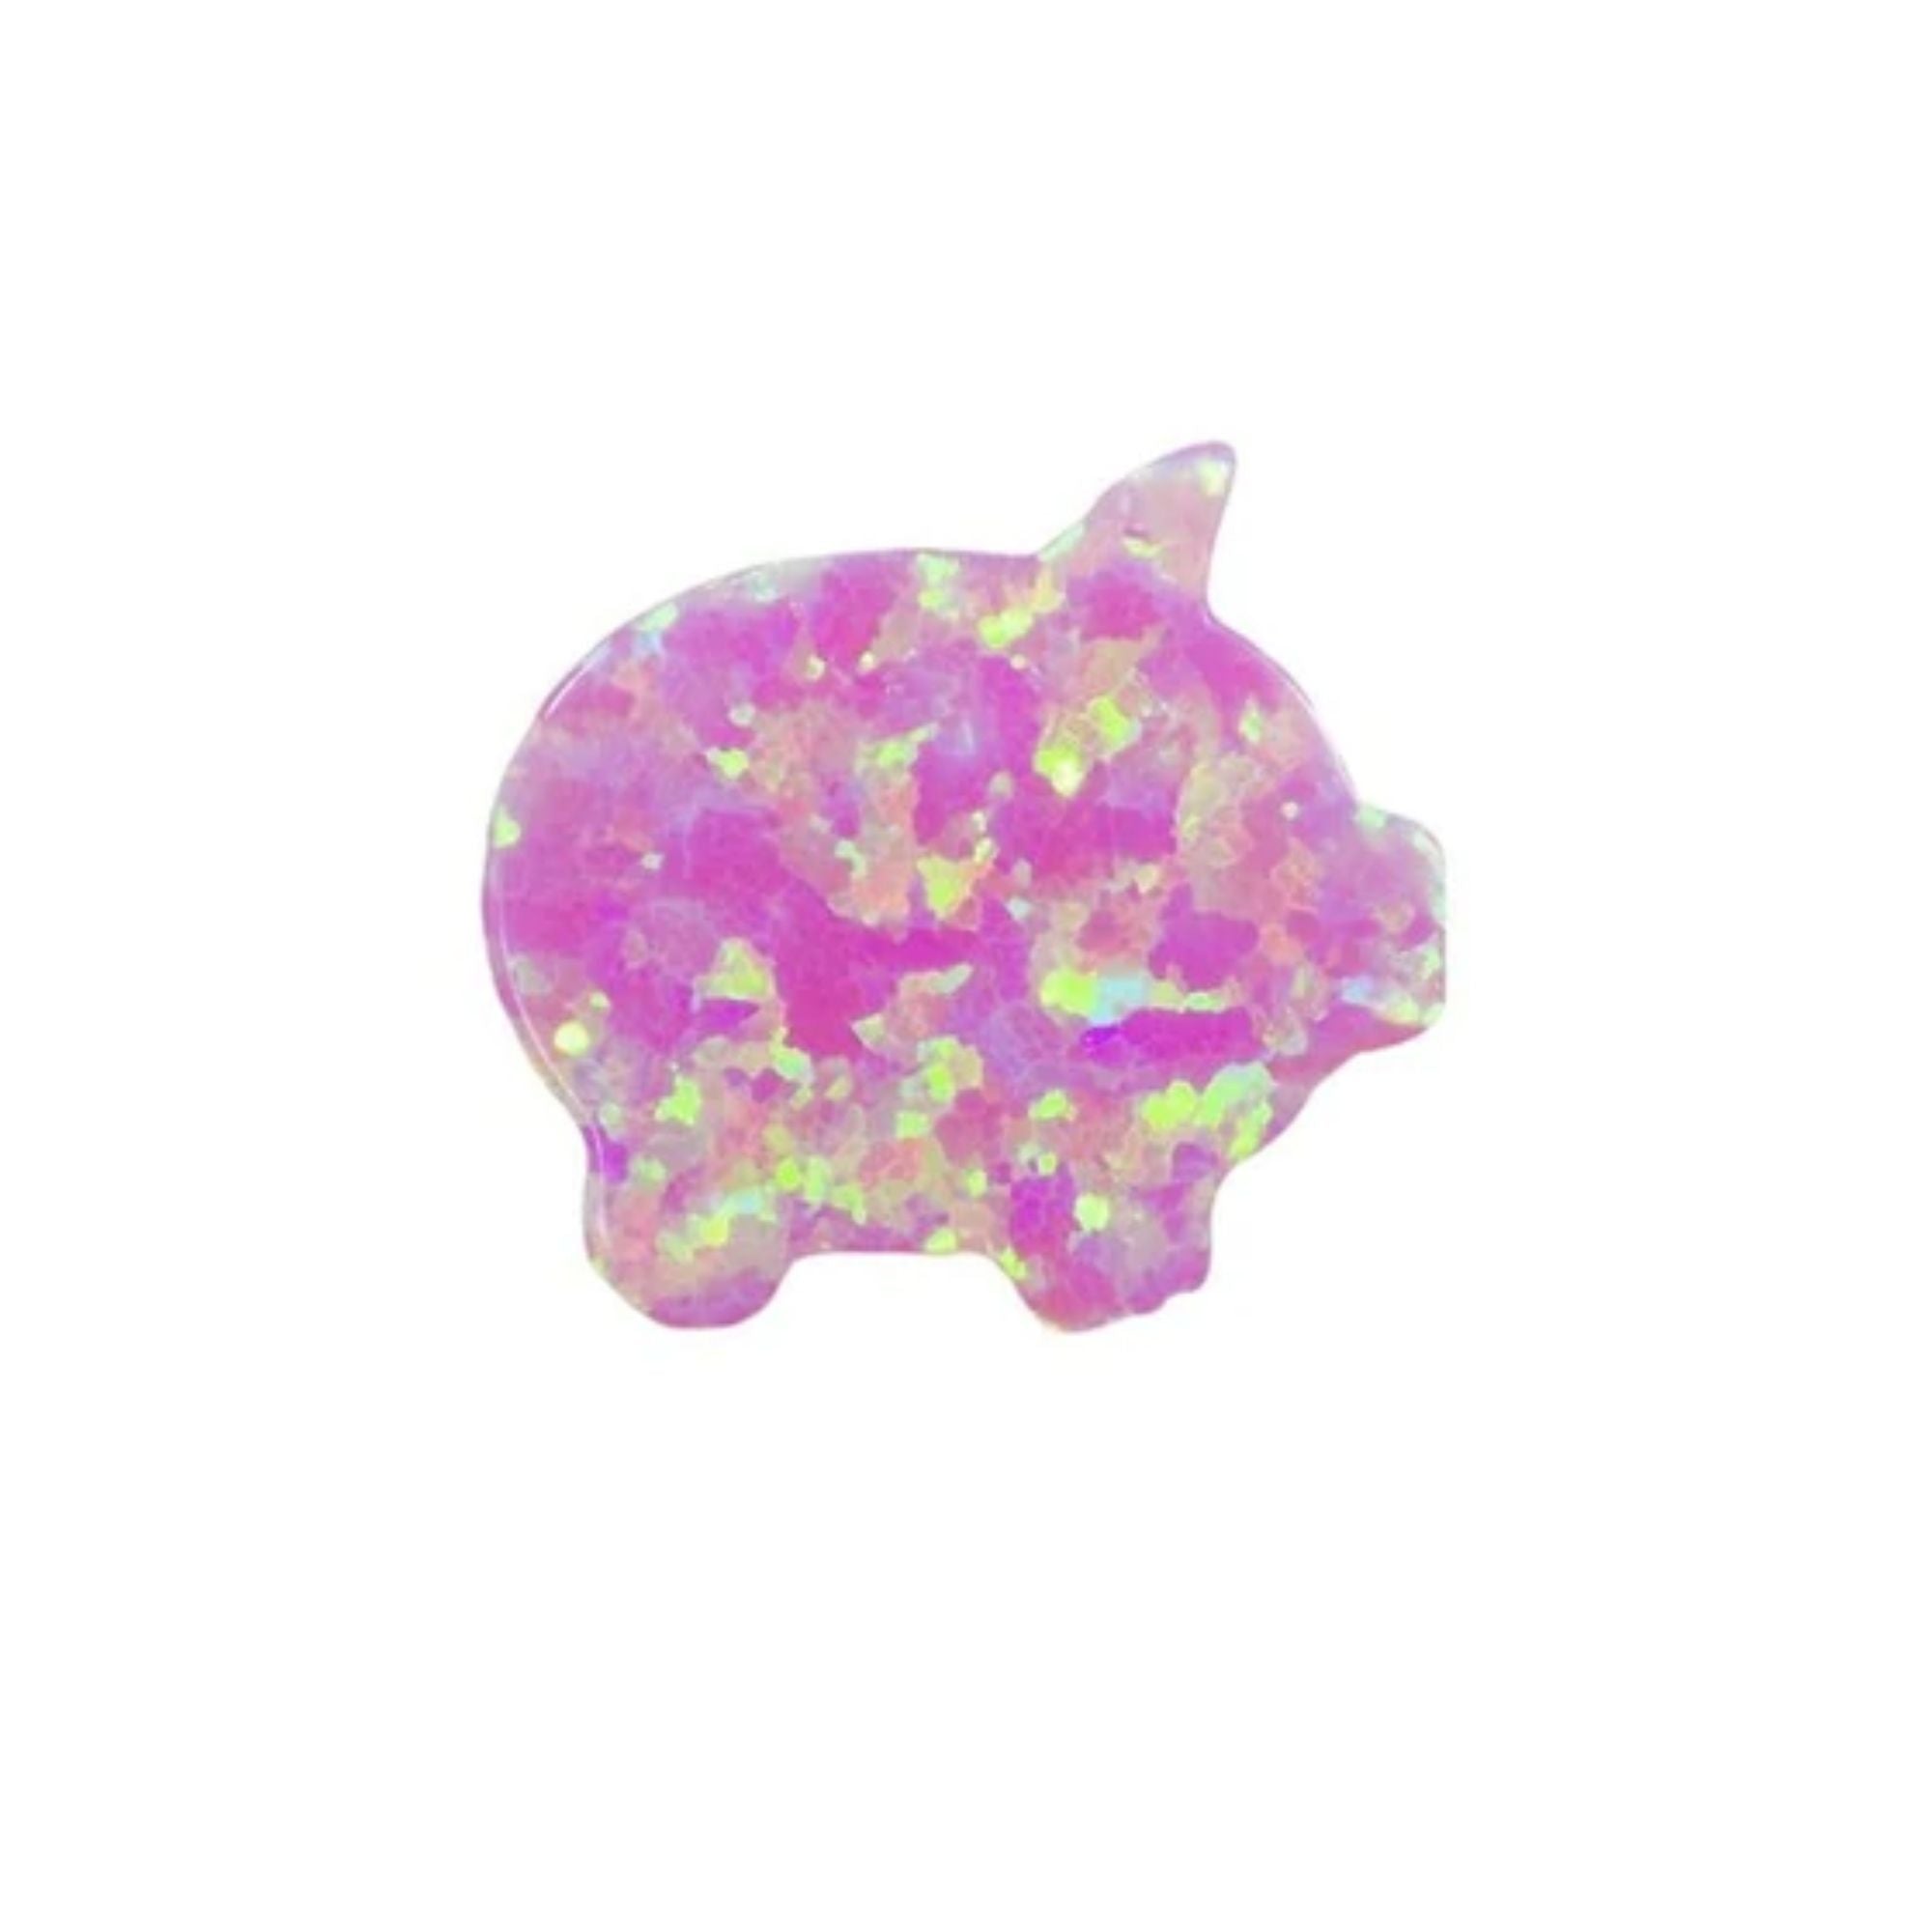 Opal Pig Pendant, Pink Pig Opal Charm,  Opal Lab Created Pig Cham